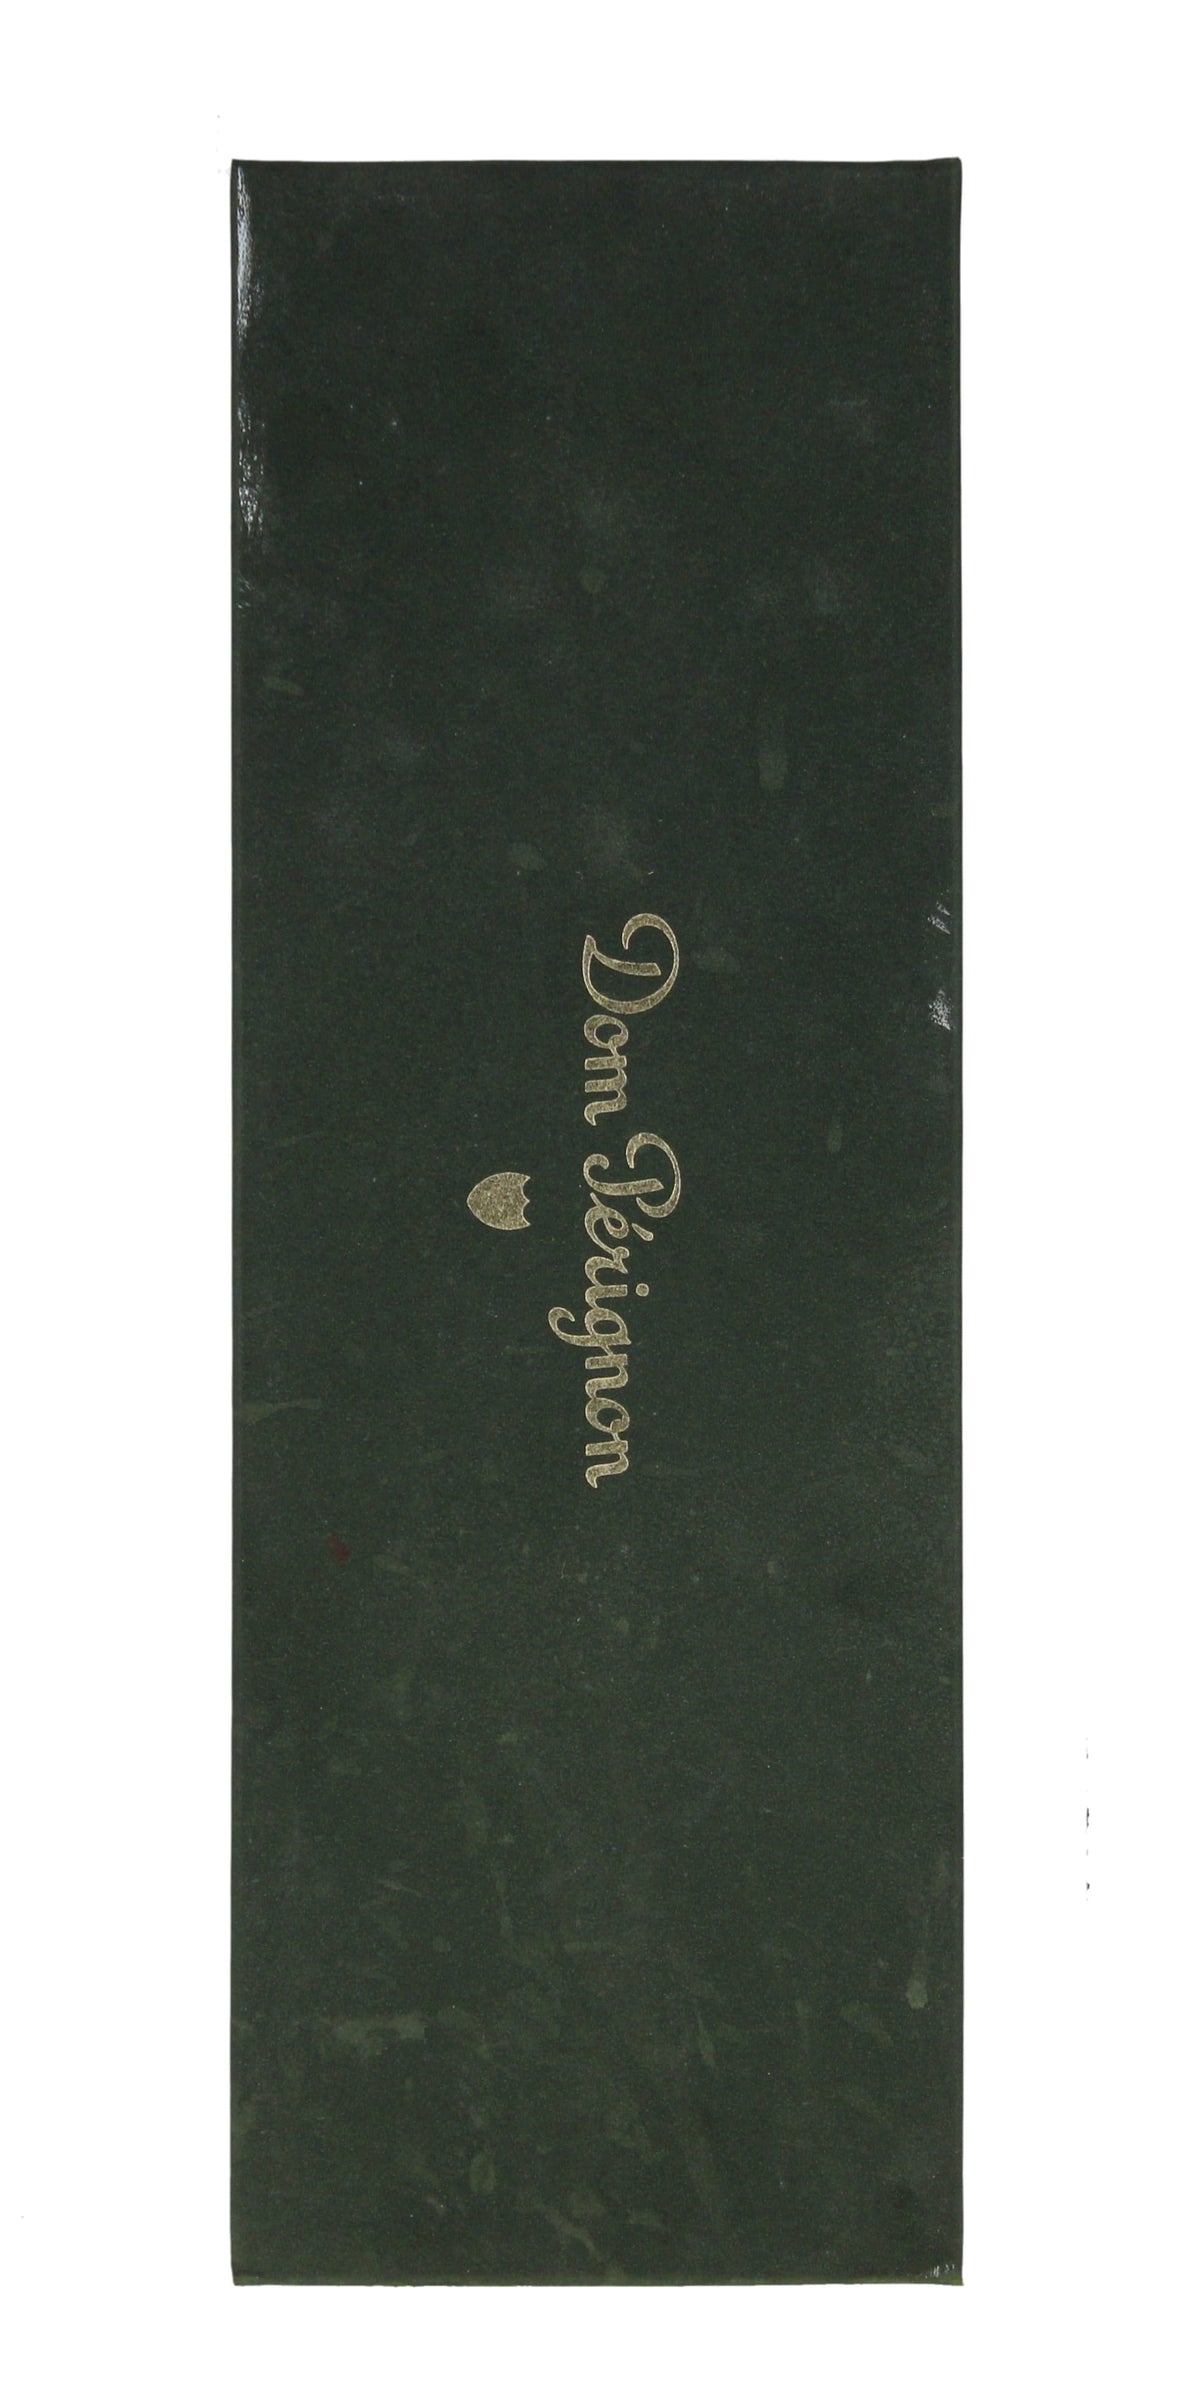 Dom Perignon Brut, Champagne, France 1999 Gift Box